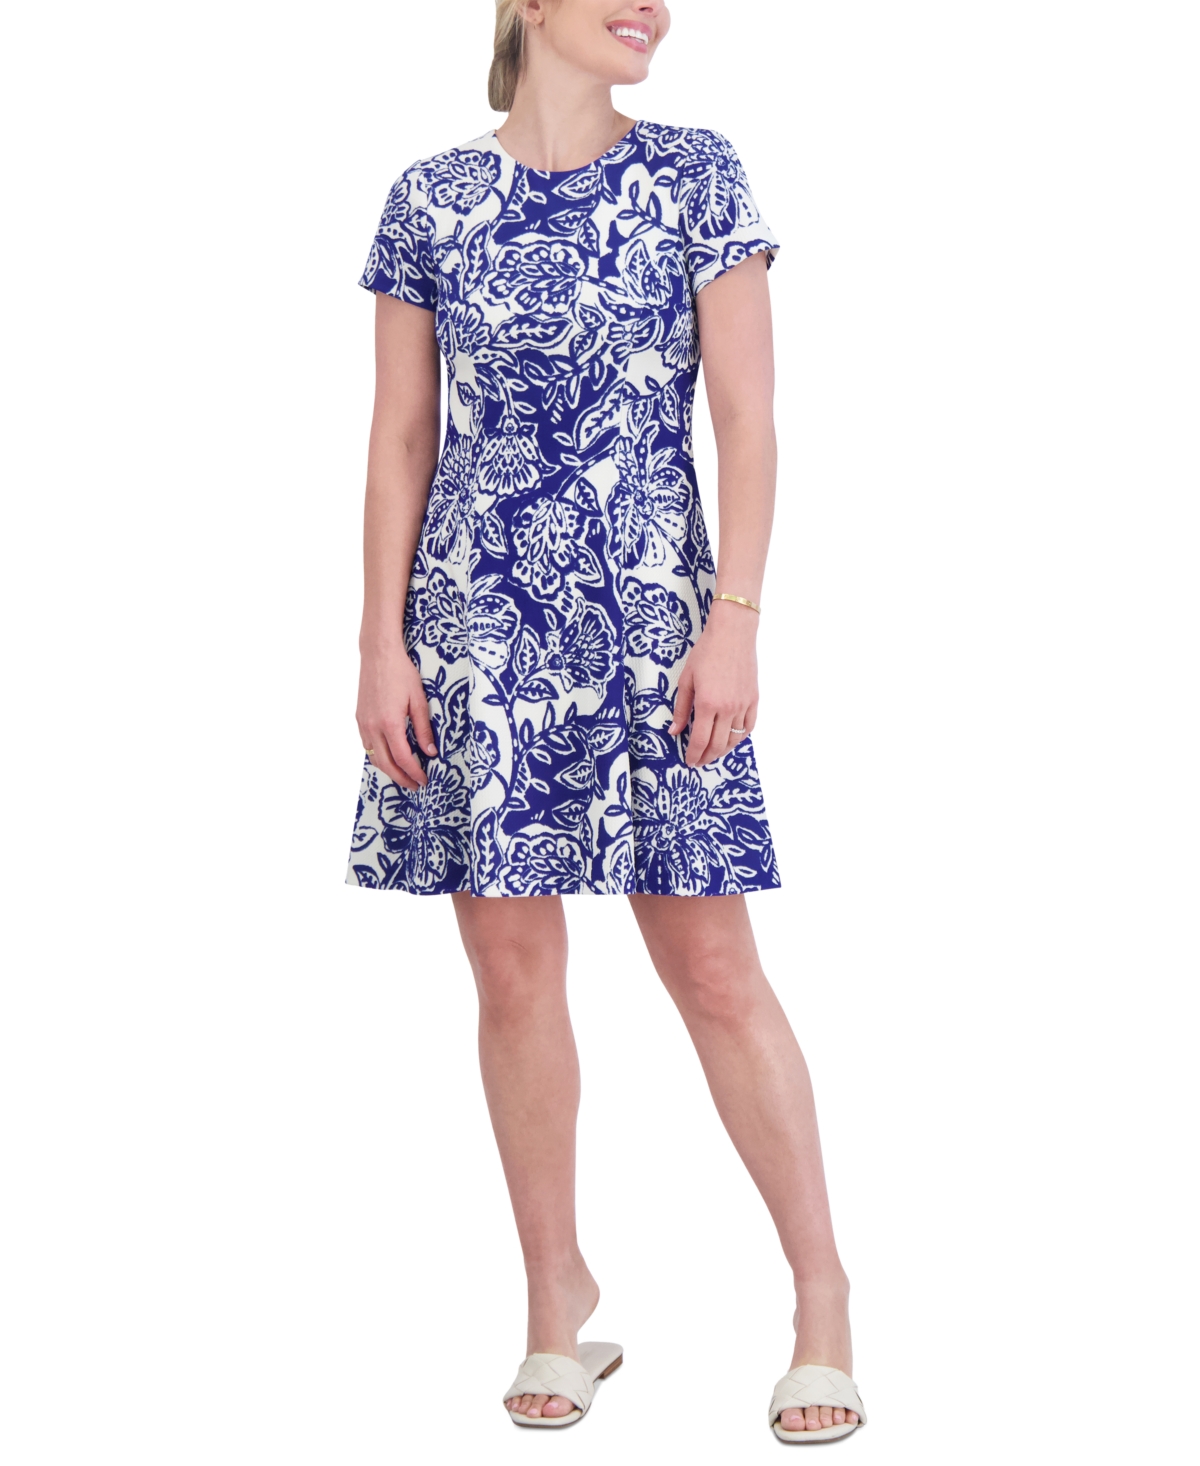 Women's Floral-Print Fit & Flare Dress - Cobalt